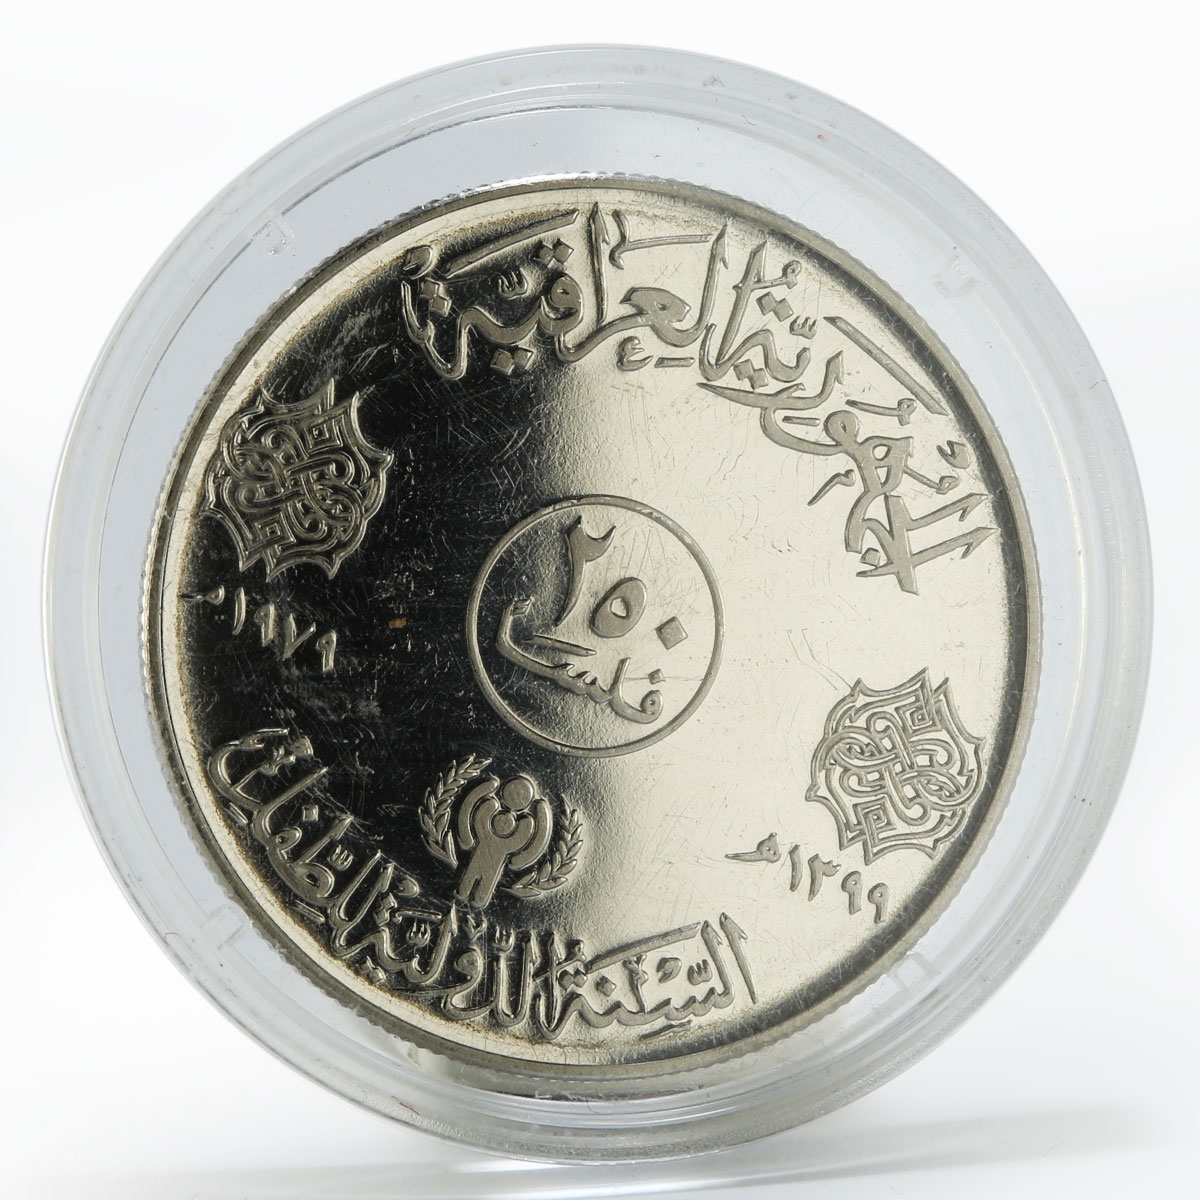 Iraq 250 fils International Year of Child proof nickel 1979